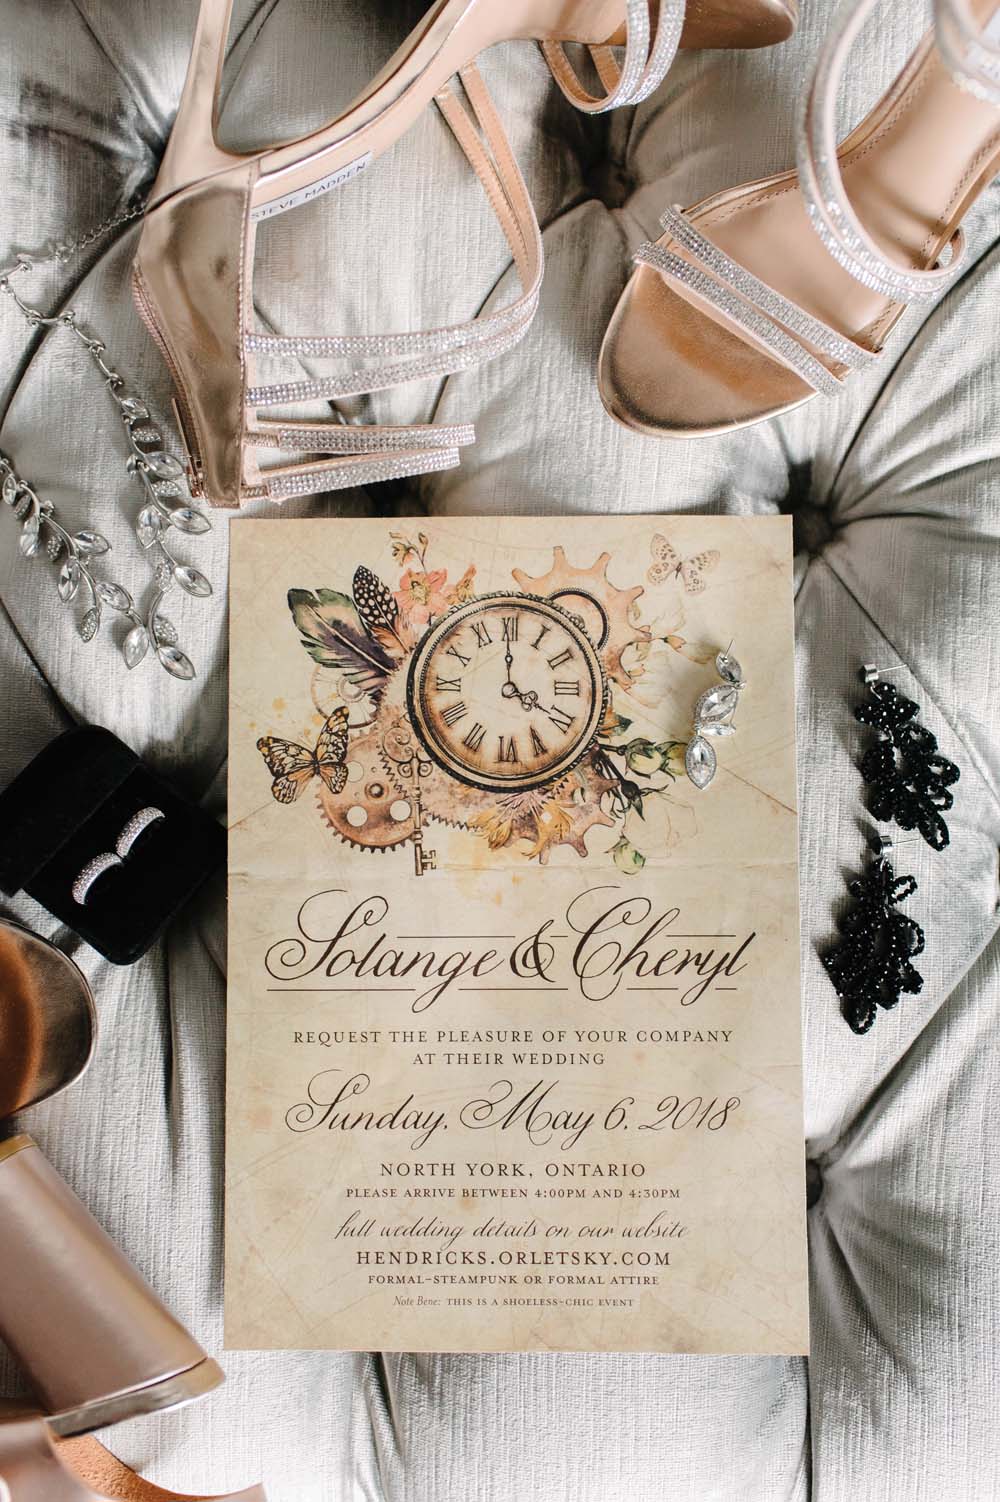 A Steampunk Inspired Wedding in Toronto, Ontario - Invitation